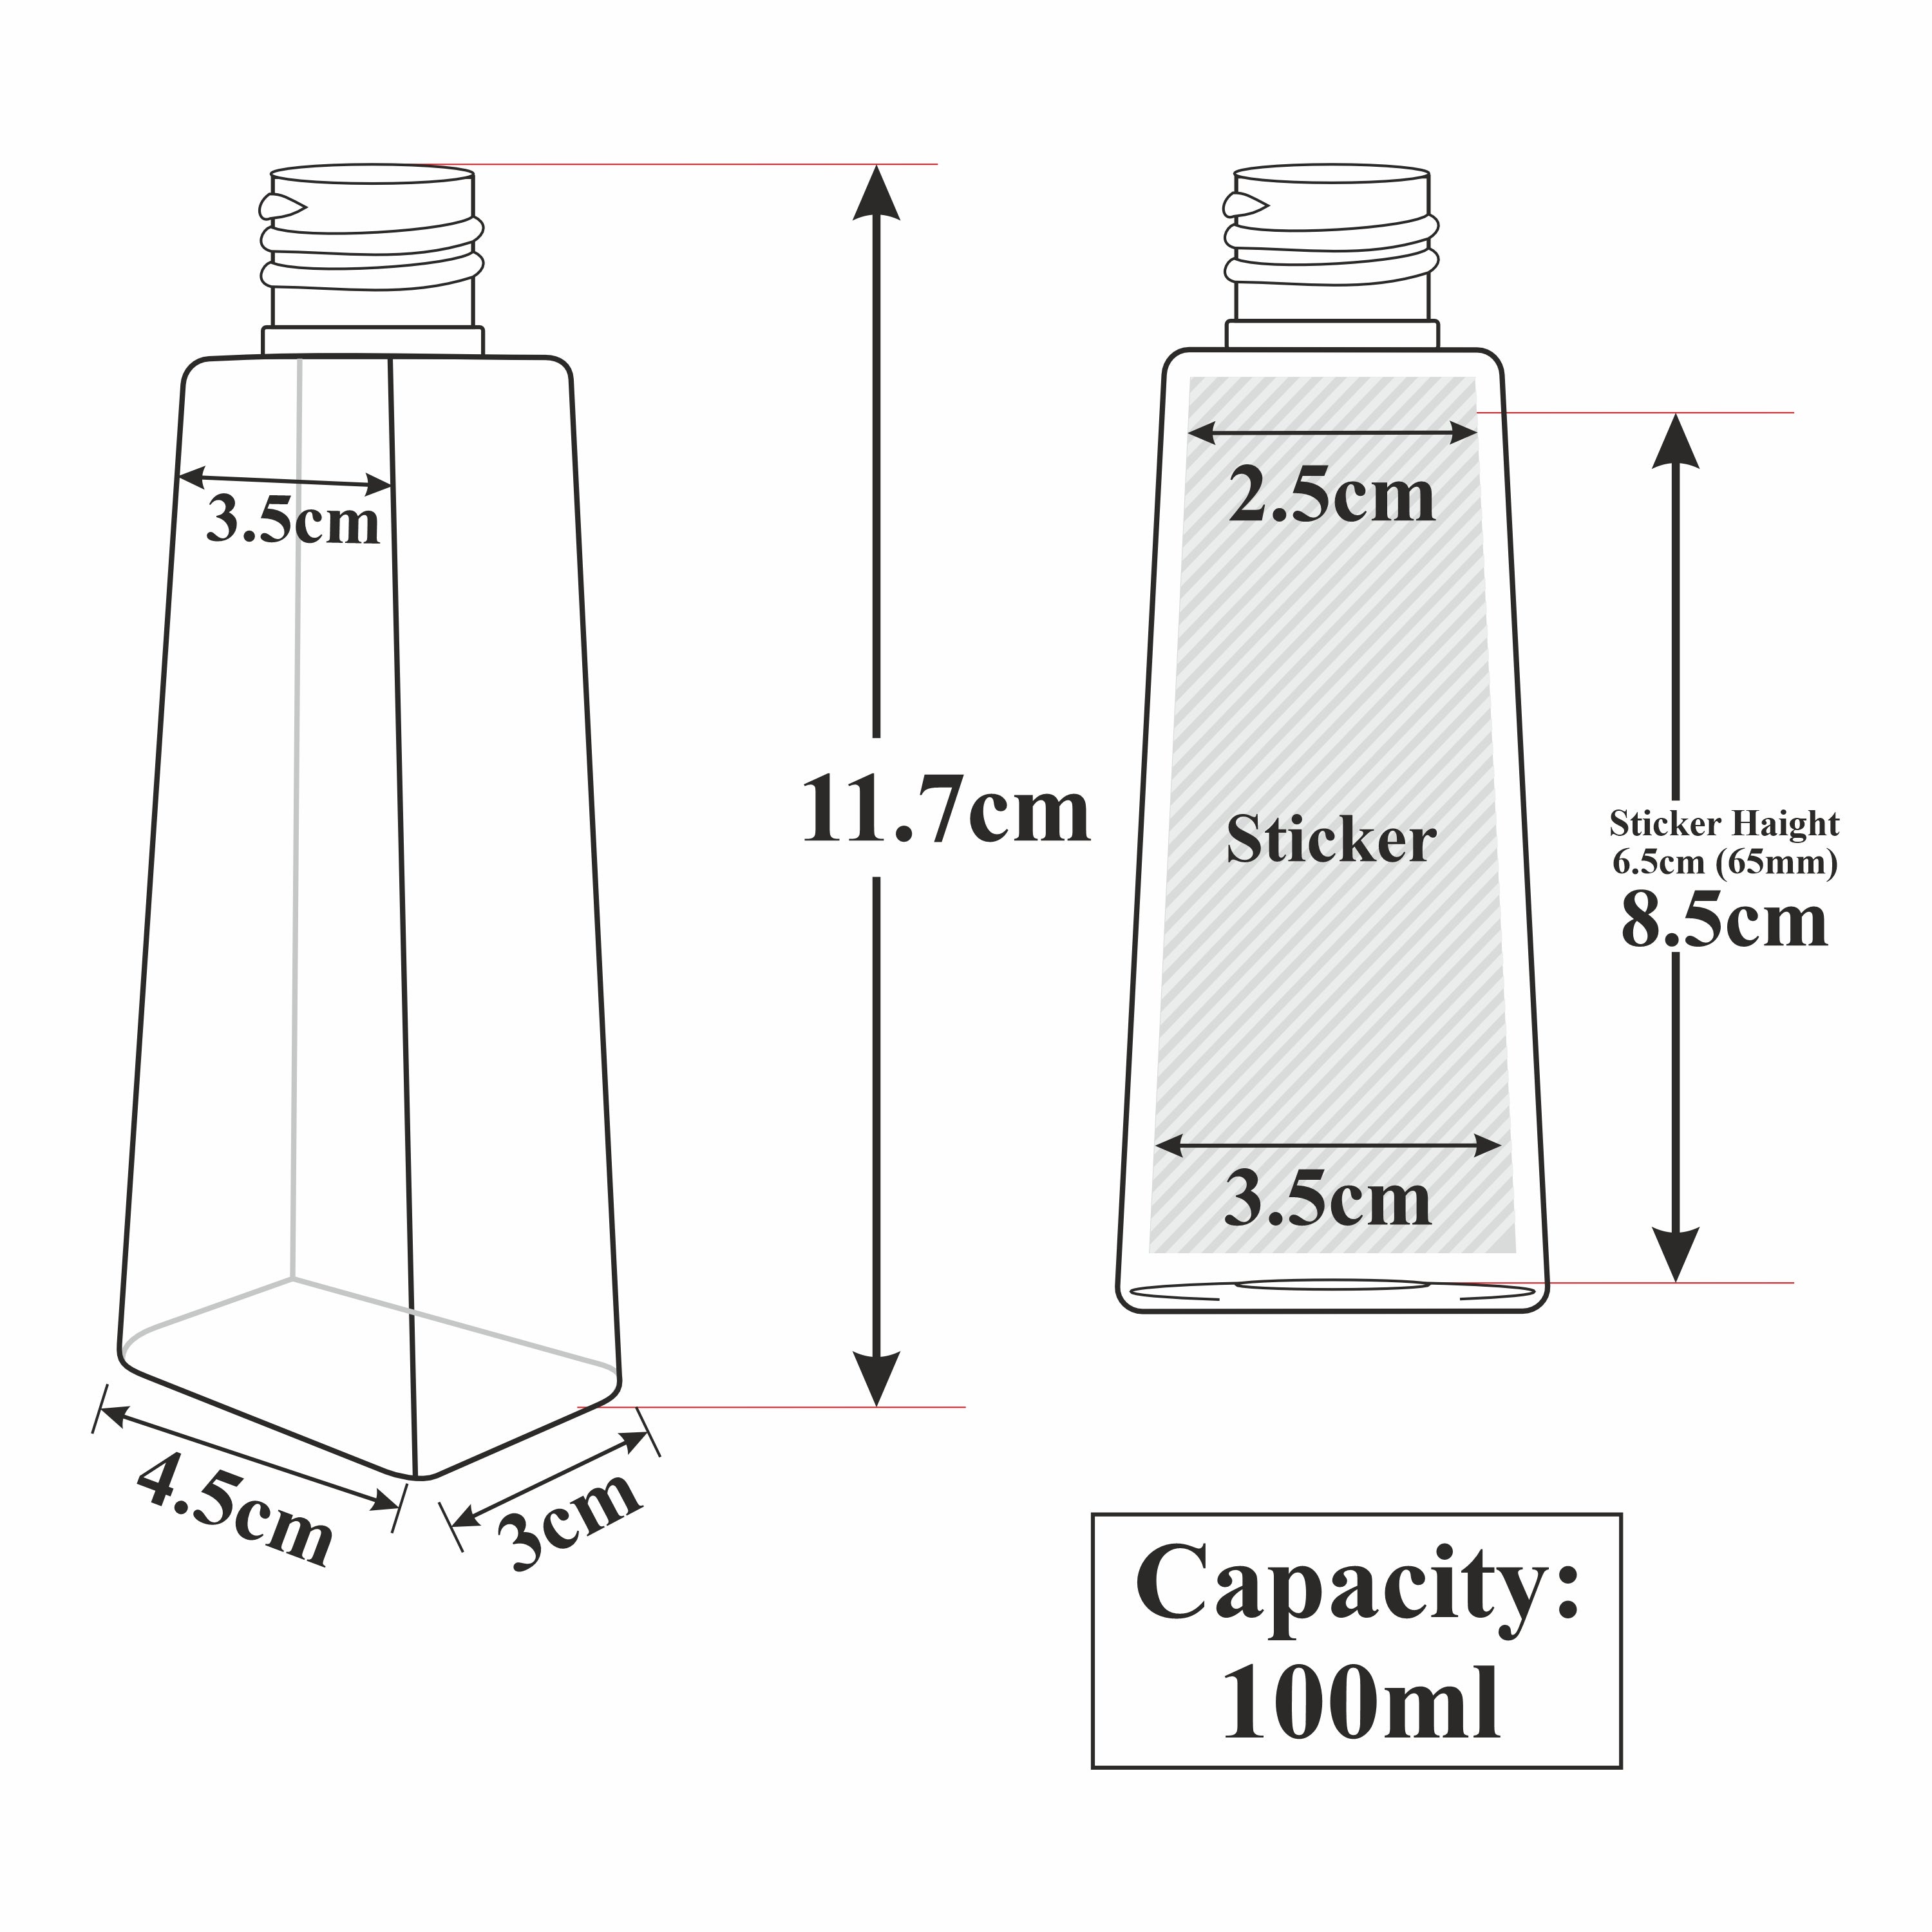 Pyramid Shape Clear Transparent Pet Bottle With Black Applicator Cap 100ml [ZMT87]